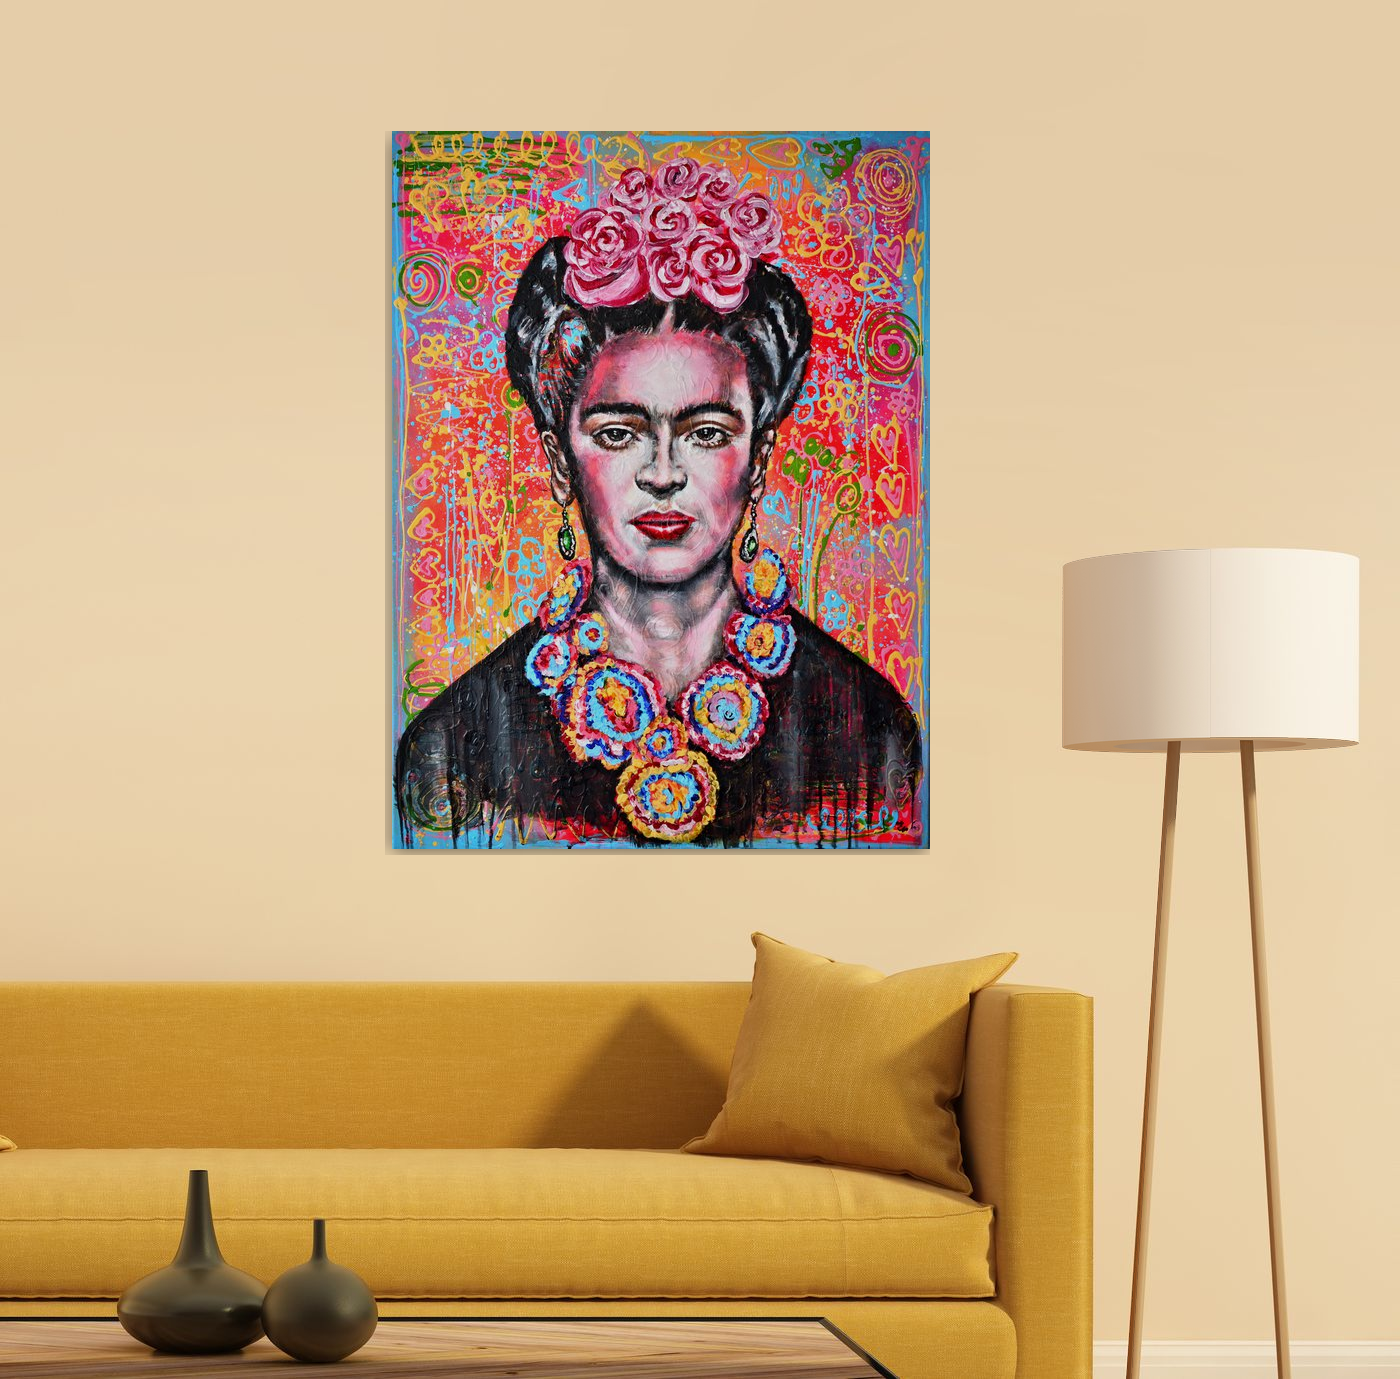 Frida Kahlo - XL Pop art portrait